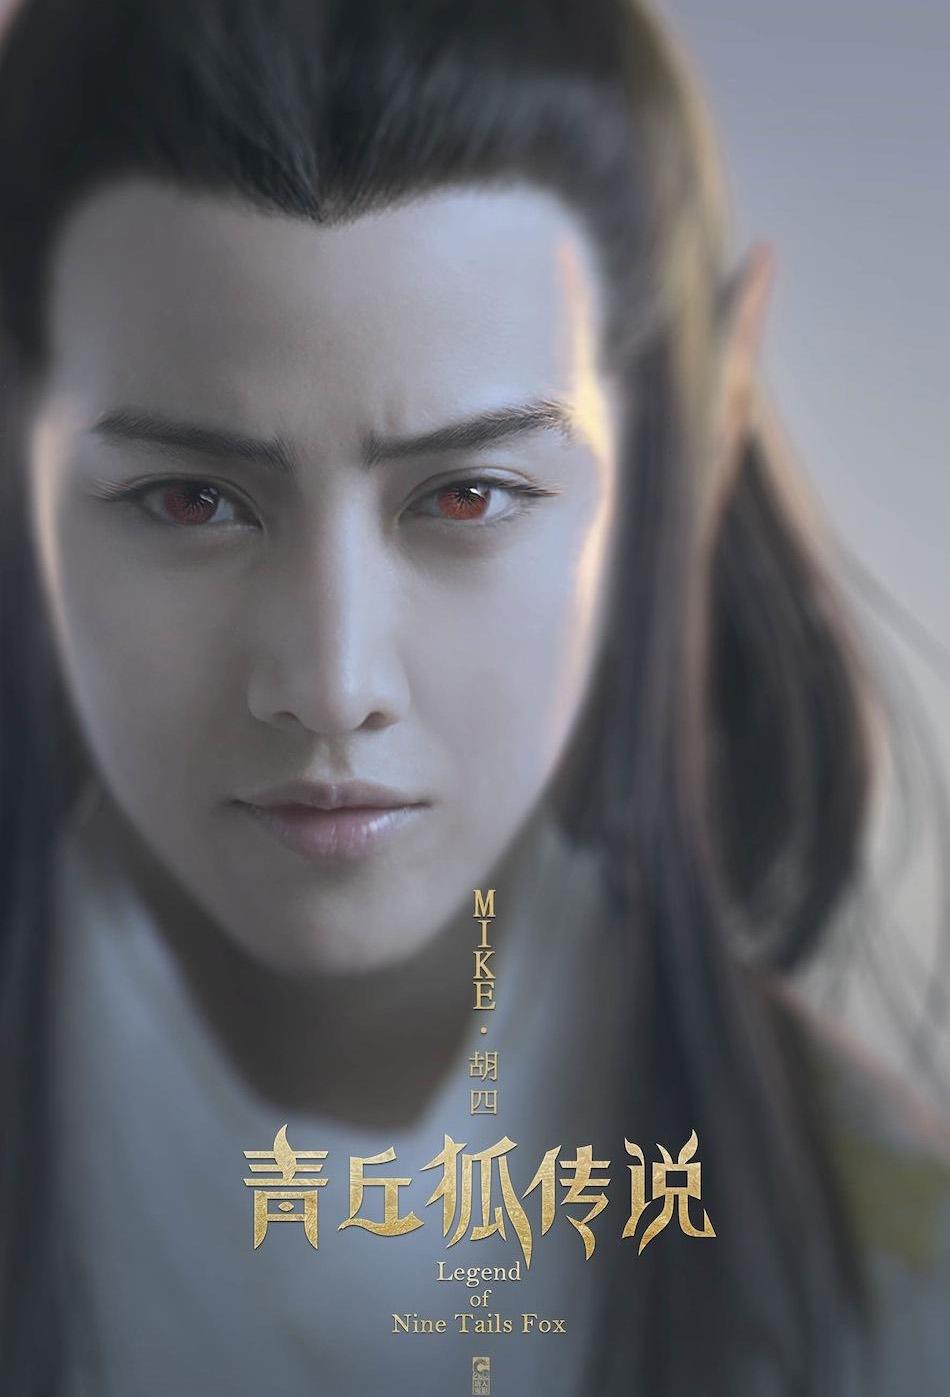 TV ratings for Legend Of The Qing Qiu Fox (青丘狐传说) in Japan. HBS TV series